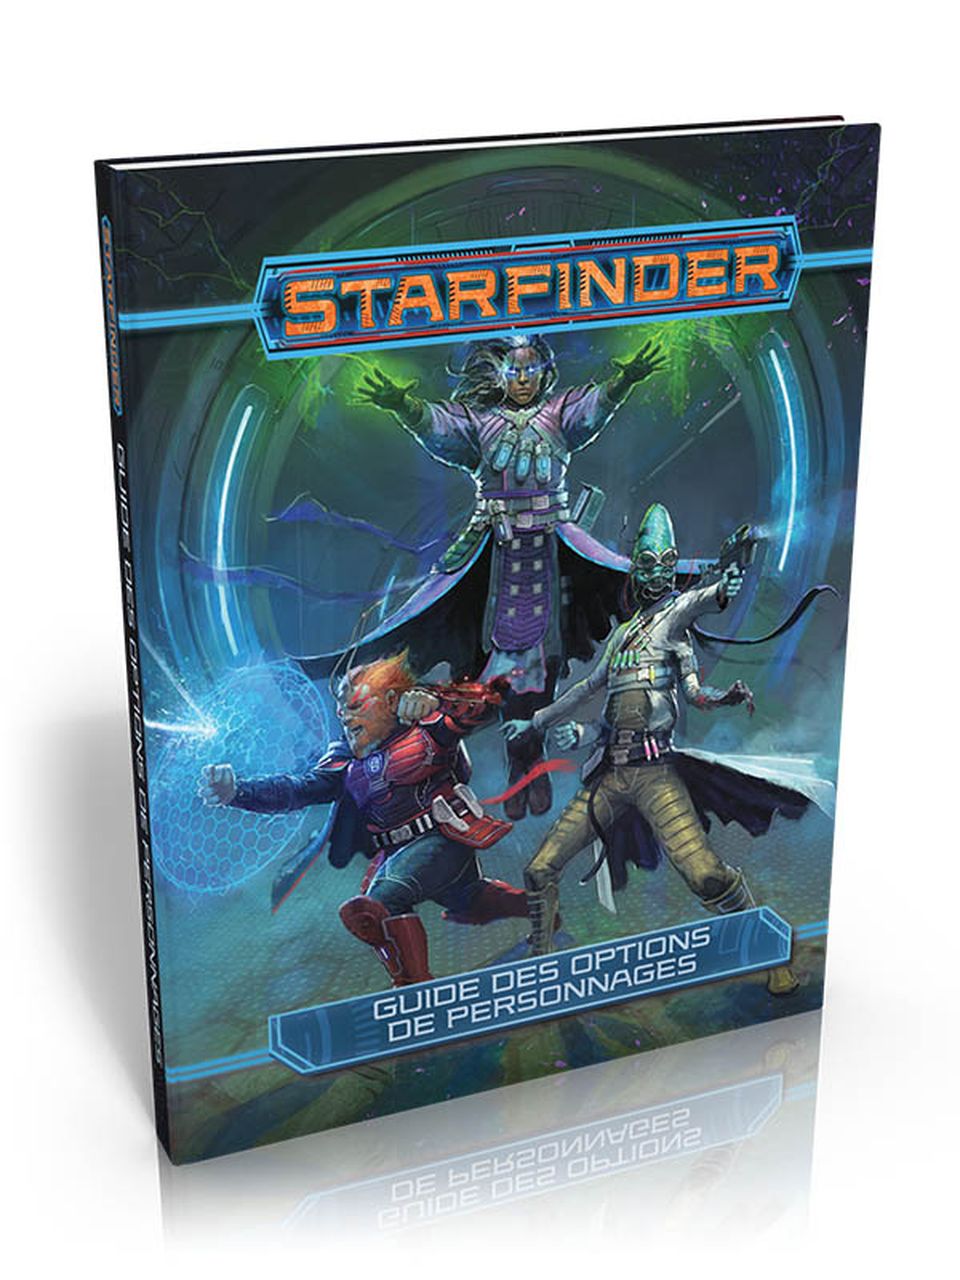 Starfinder - Guide des options de personnages image